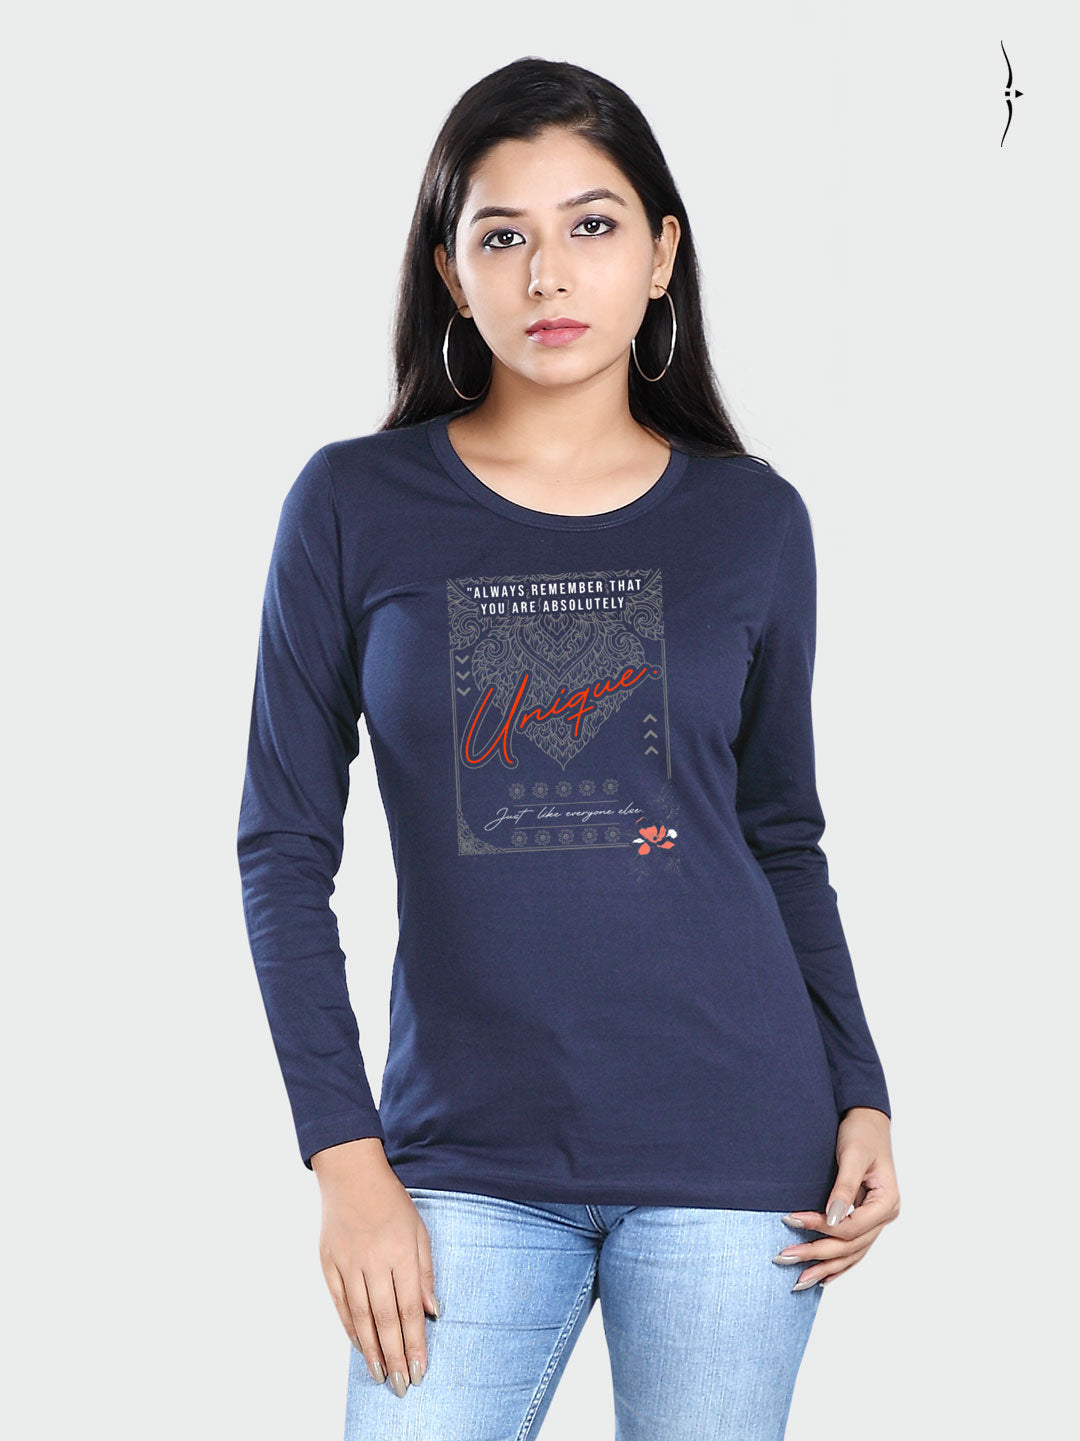 Women's Navy Blue Round Neck with Tulip Sleeve T-Shirt